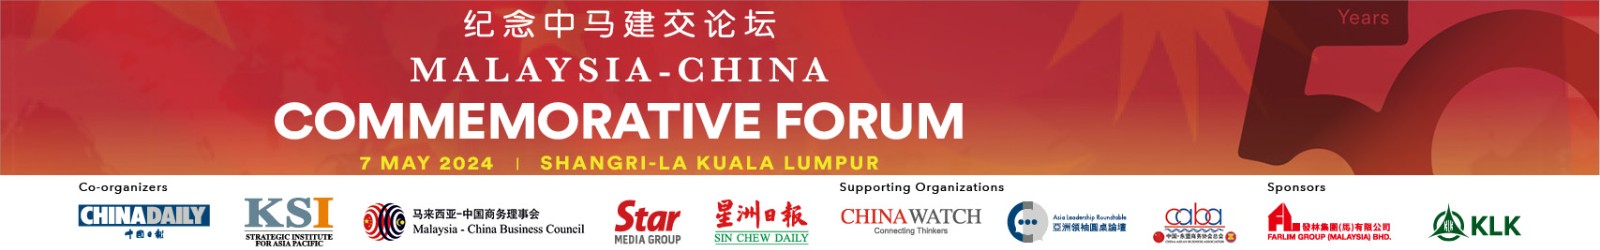 Malaysia-China Commemorative Forum